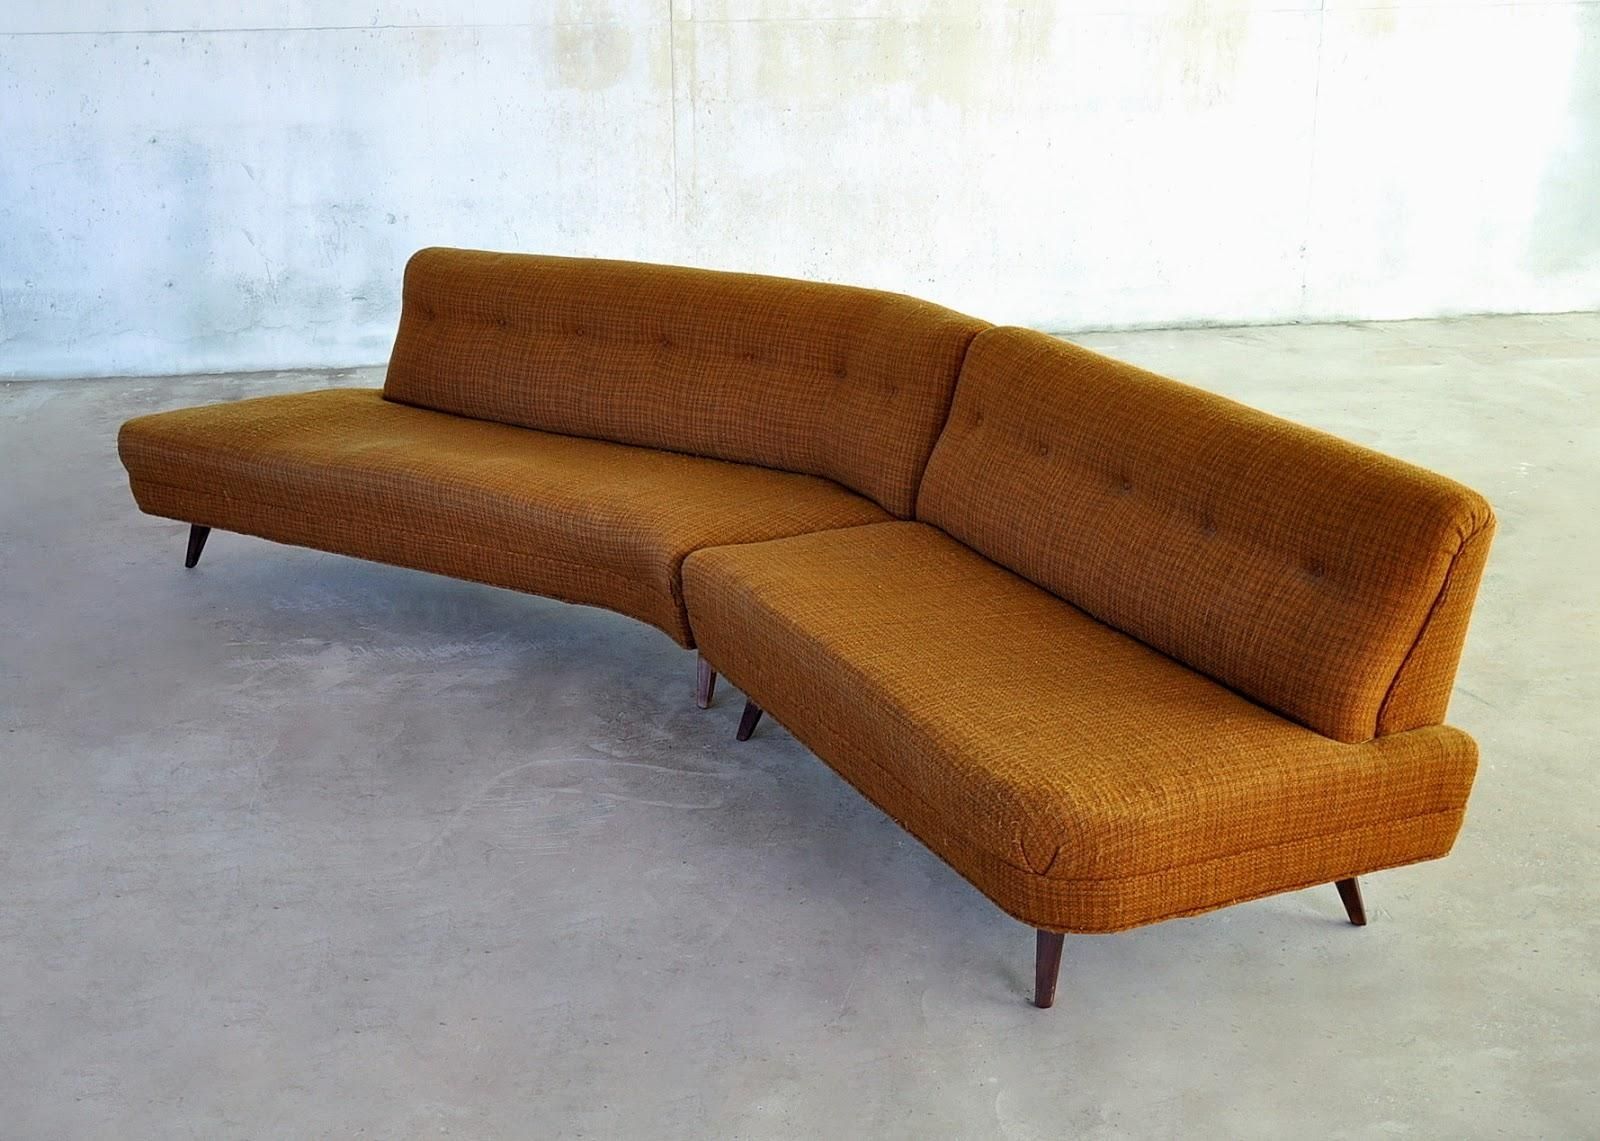 Modern Sectional Sofa Toronto (View 10 of 15)